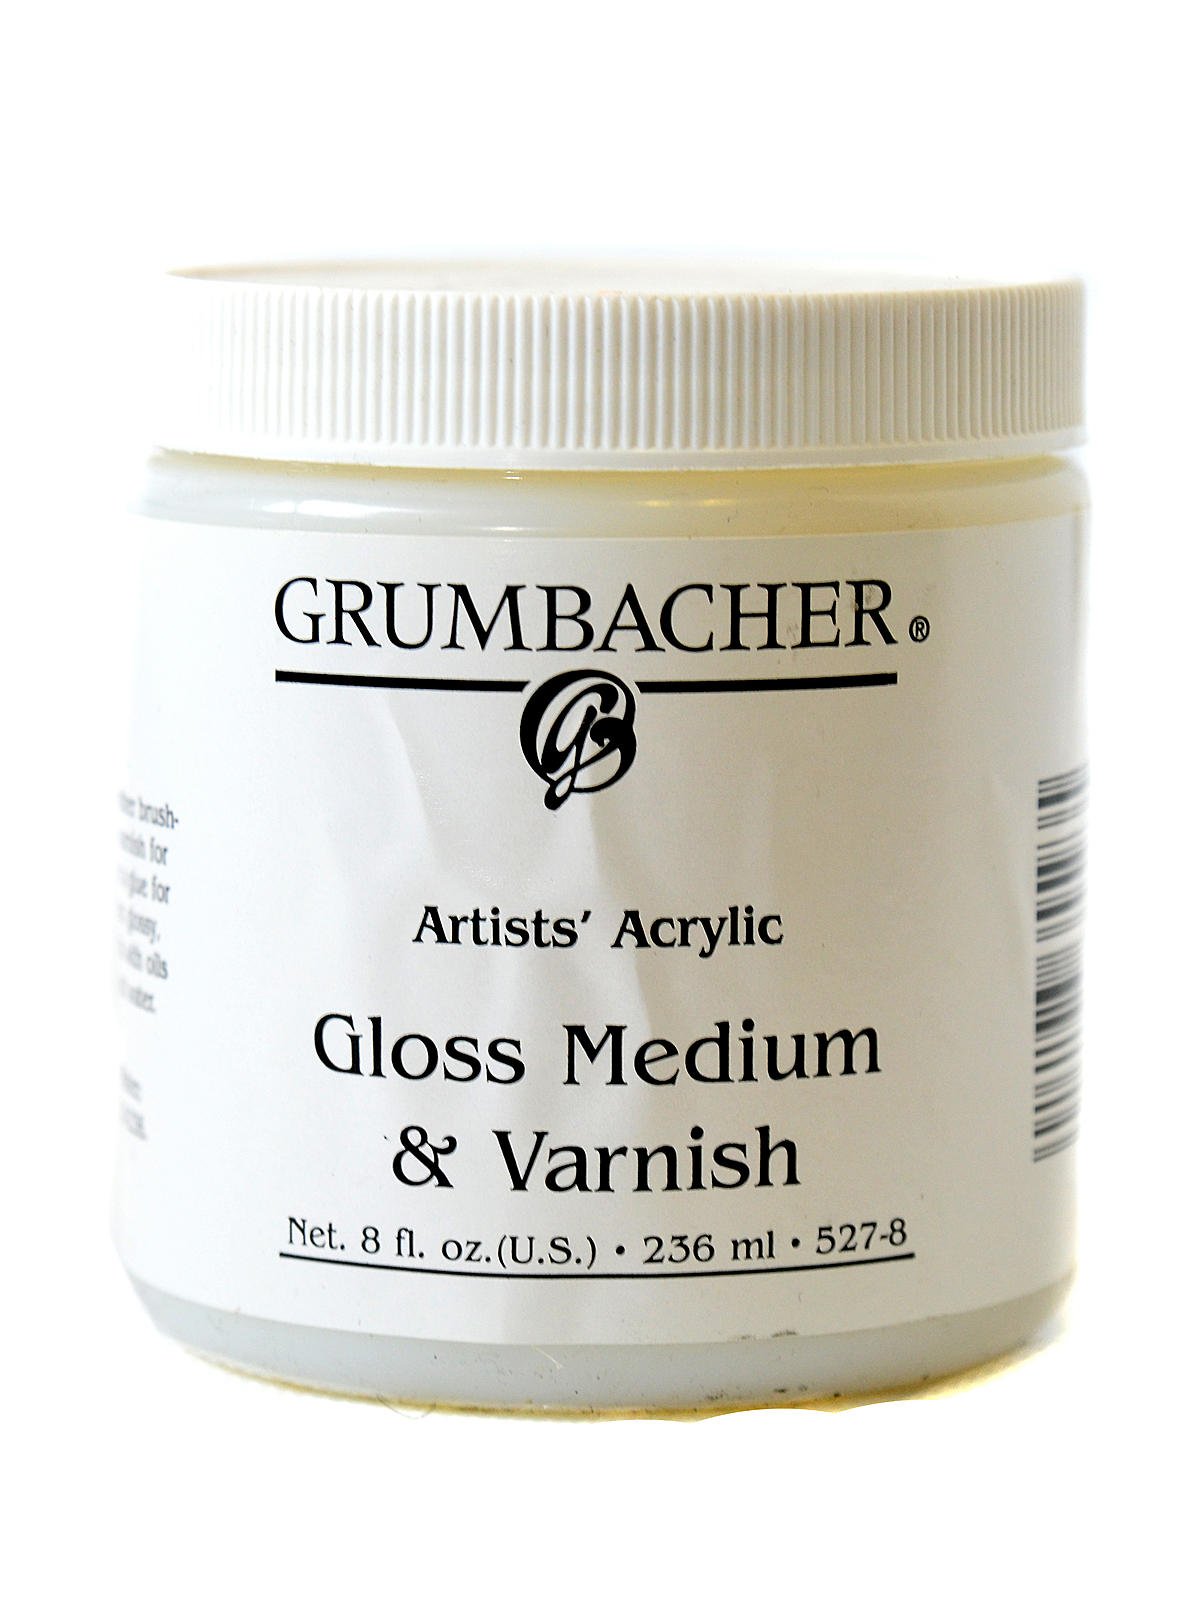 Grumbacher - Acrylic Gloss Medium & Varnish